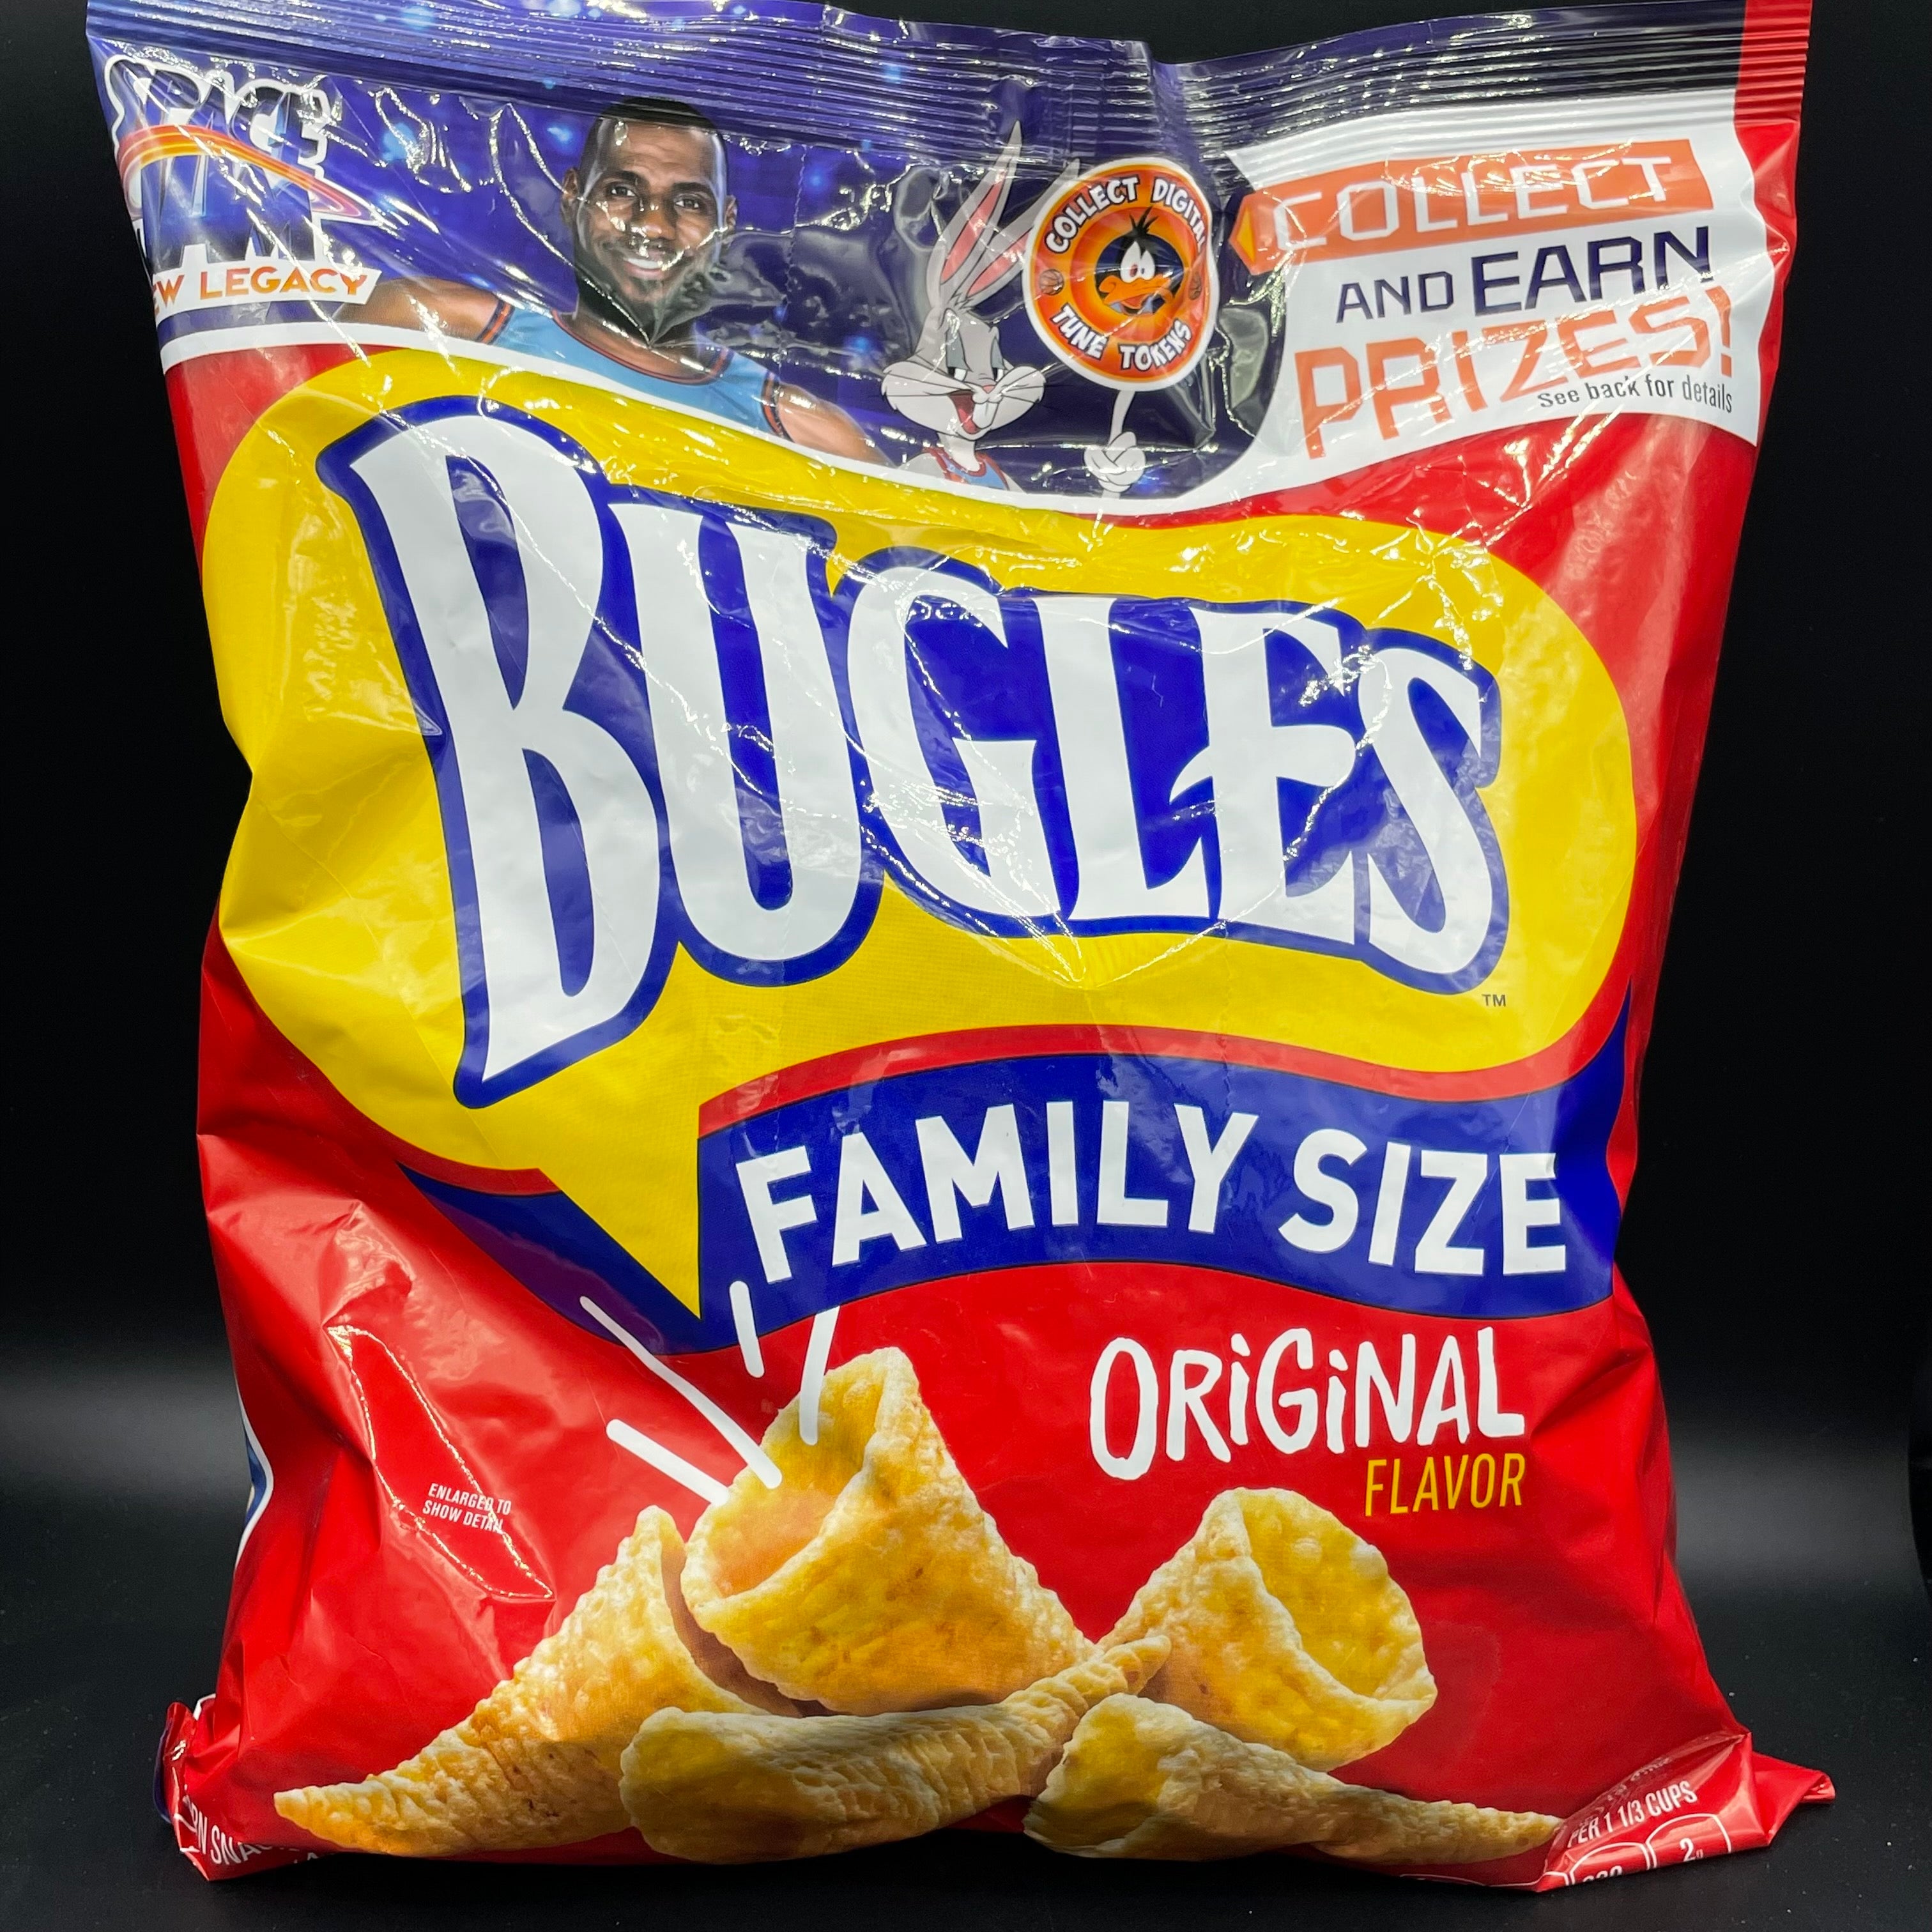 NEW Bugles Original Flavor - Space Jam Promo Bag, Family Size 411g (US